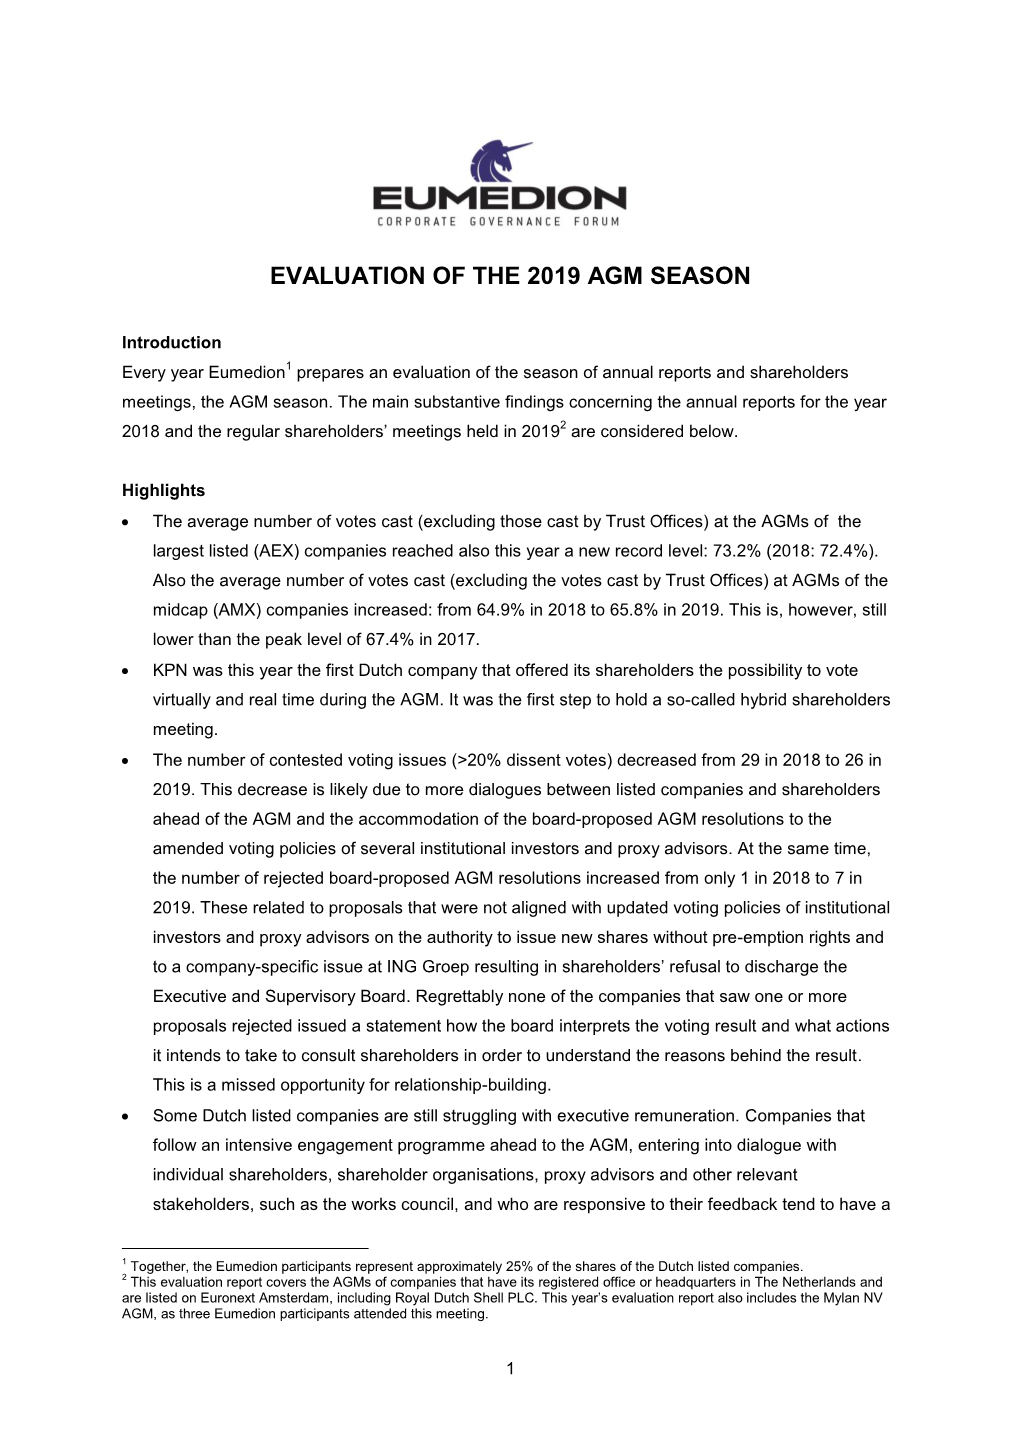 Evaluation of the 2019 Agm Season